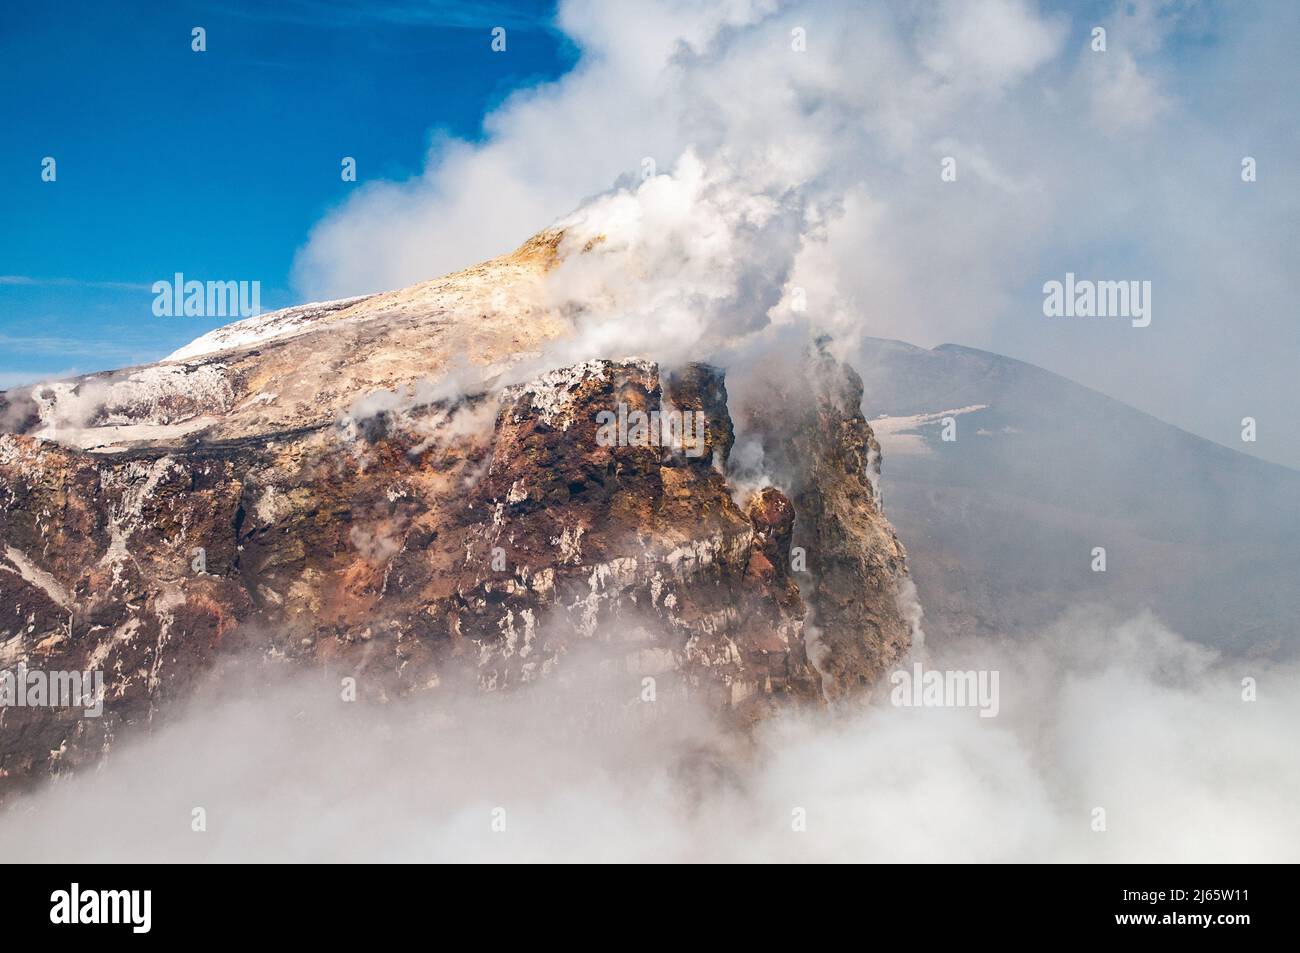 Gipfelkrater bocca Nuova, Vulkan Ätna, Sizilien, 3300 metri Höhe - cratere sommitale sul Monte Etna, Sicilia Foto Stock